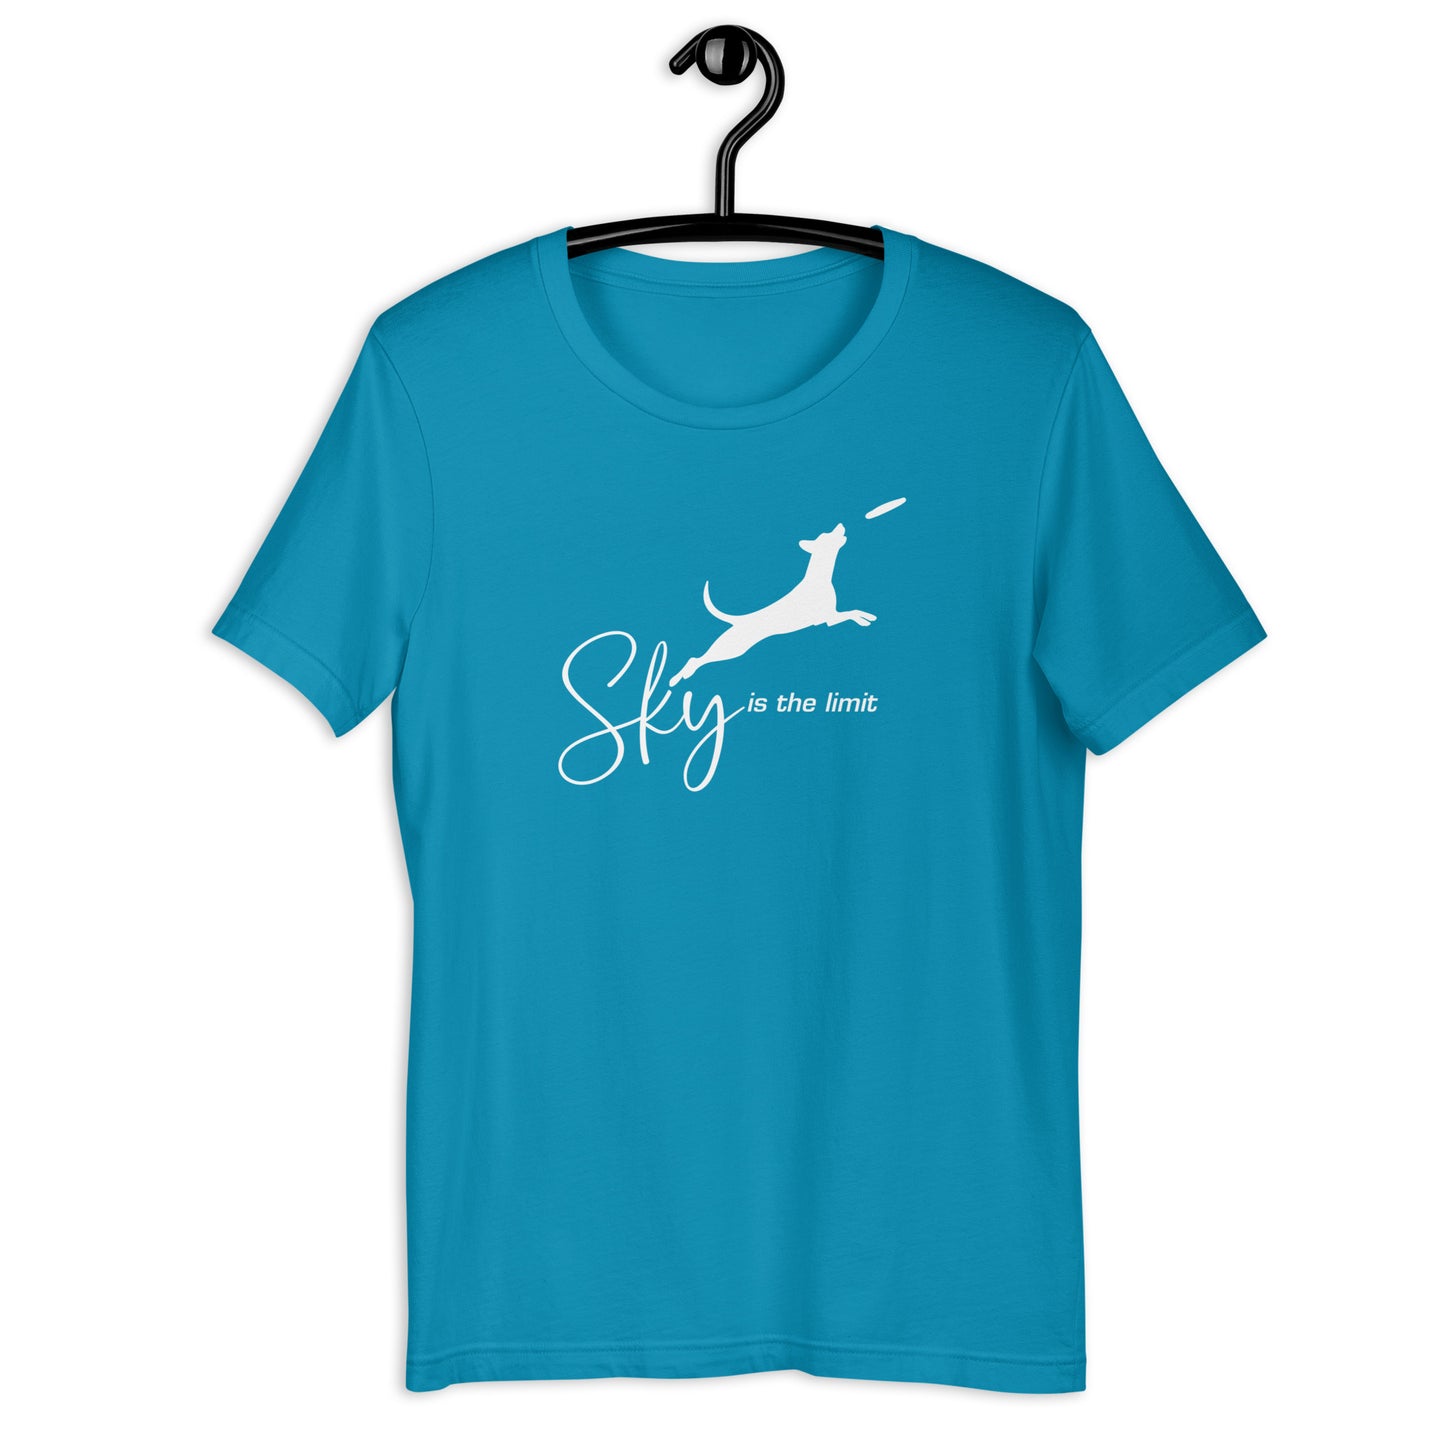 SKY IS THE LIMIT - Unisex t-shirt